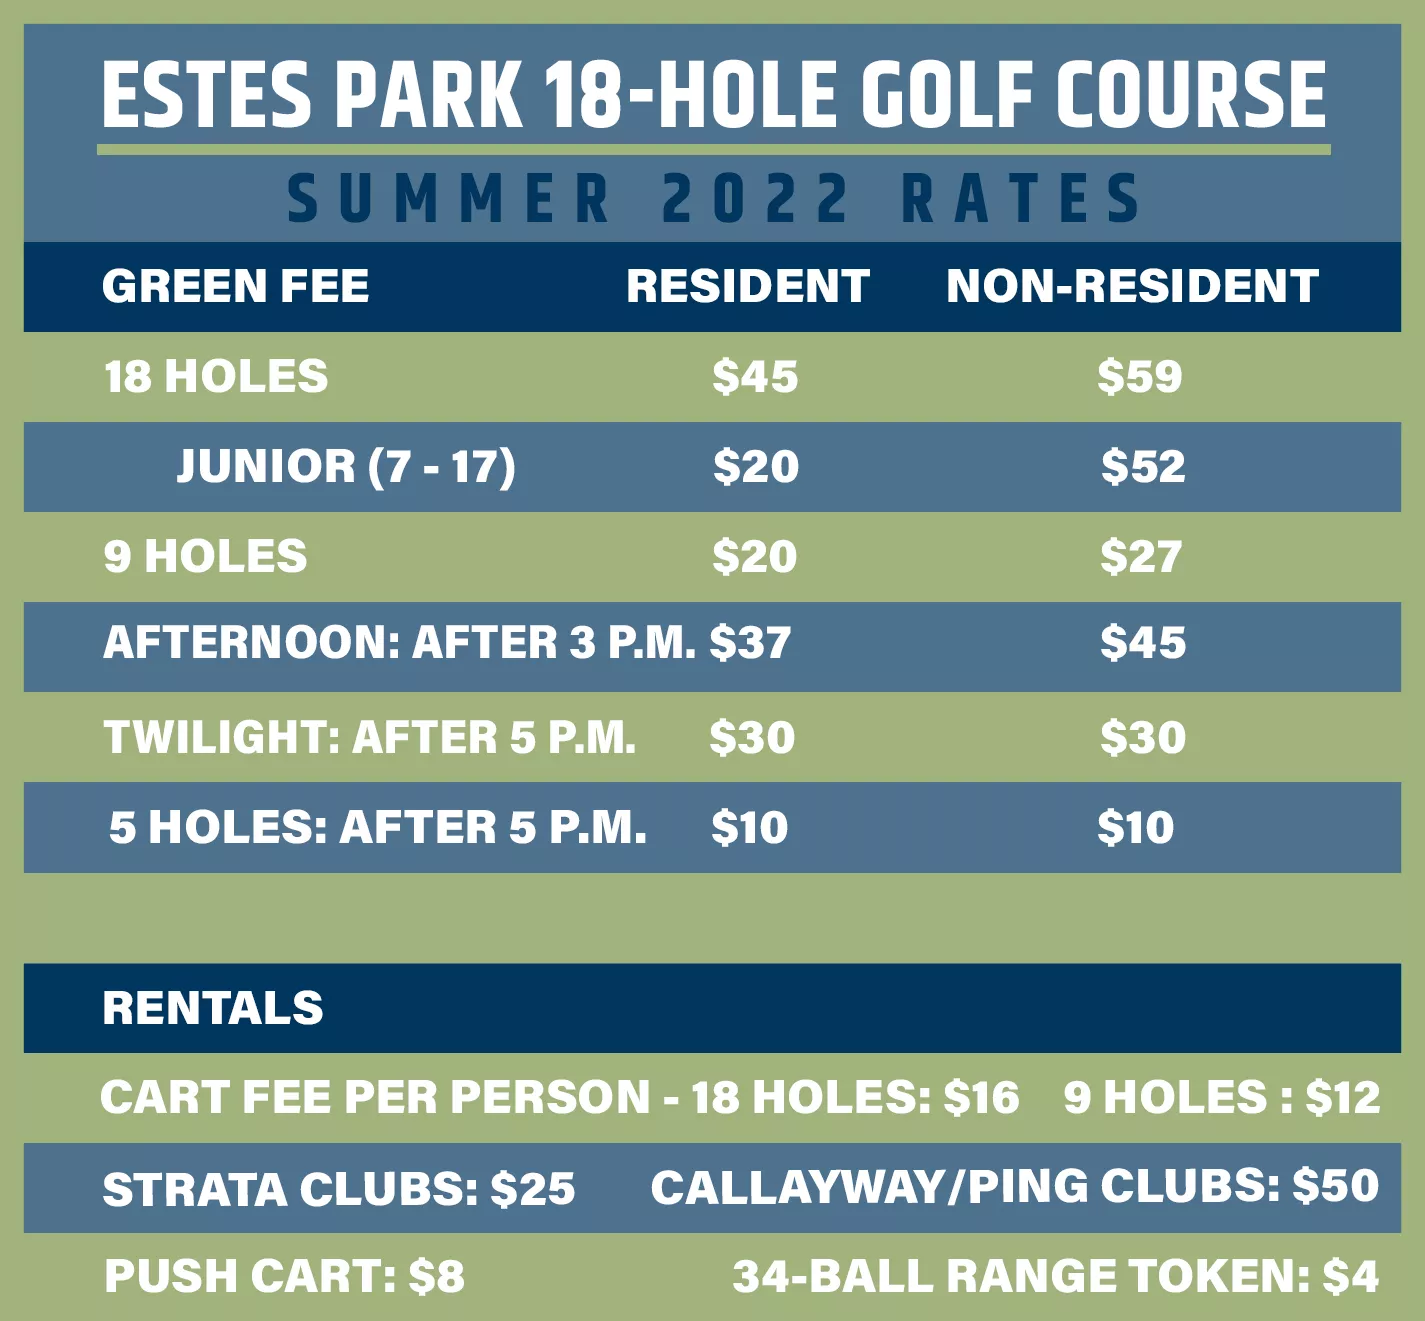 Summer 2022 Rates for the Estes Park 18-Hole Golf Course